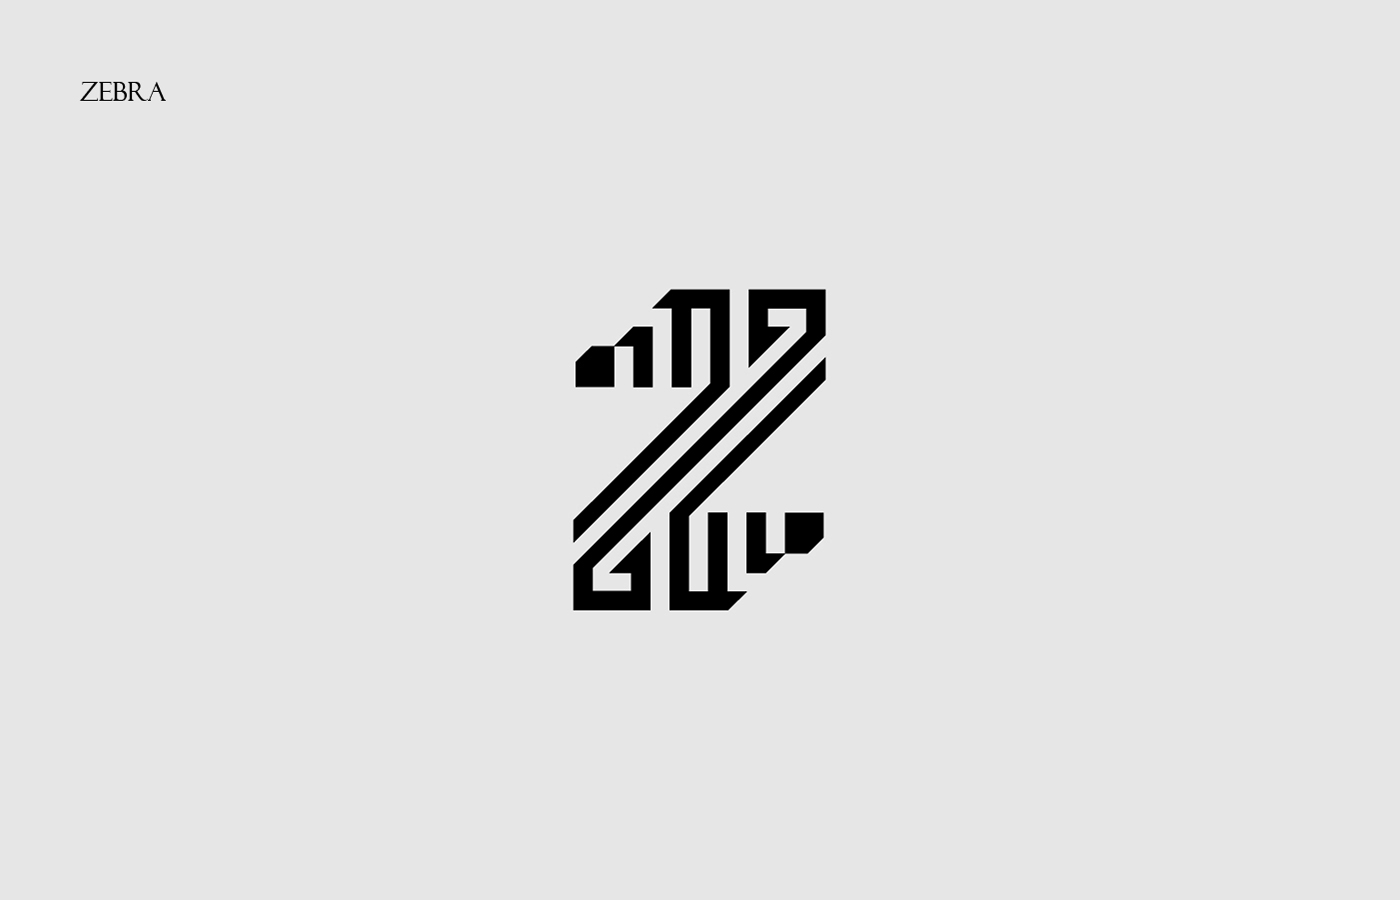 animals alphabet letters 36daysoftype logo type creative colors lettering typographic ABC instagram symbol Saudi Kuwait